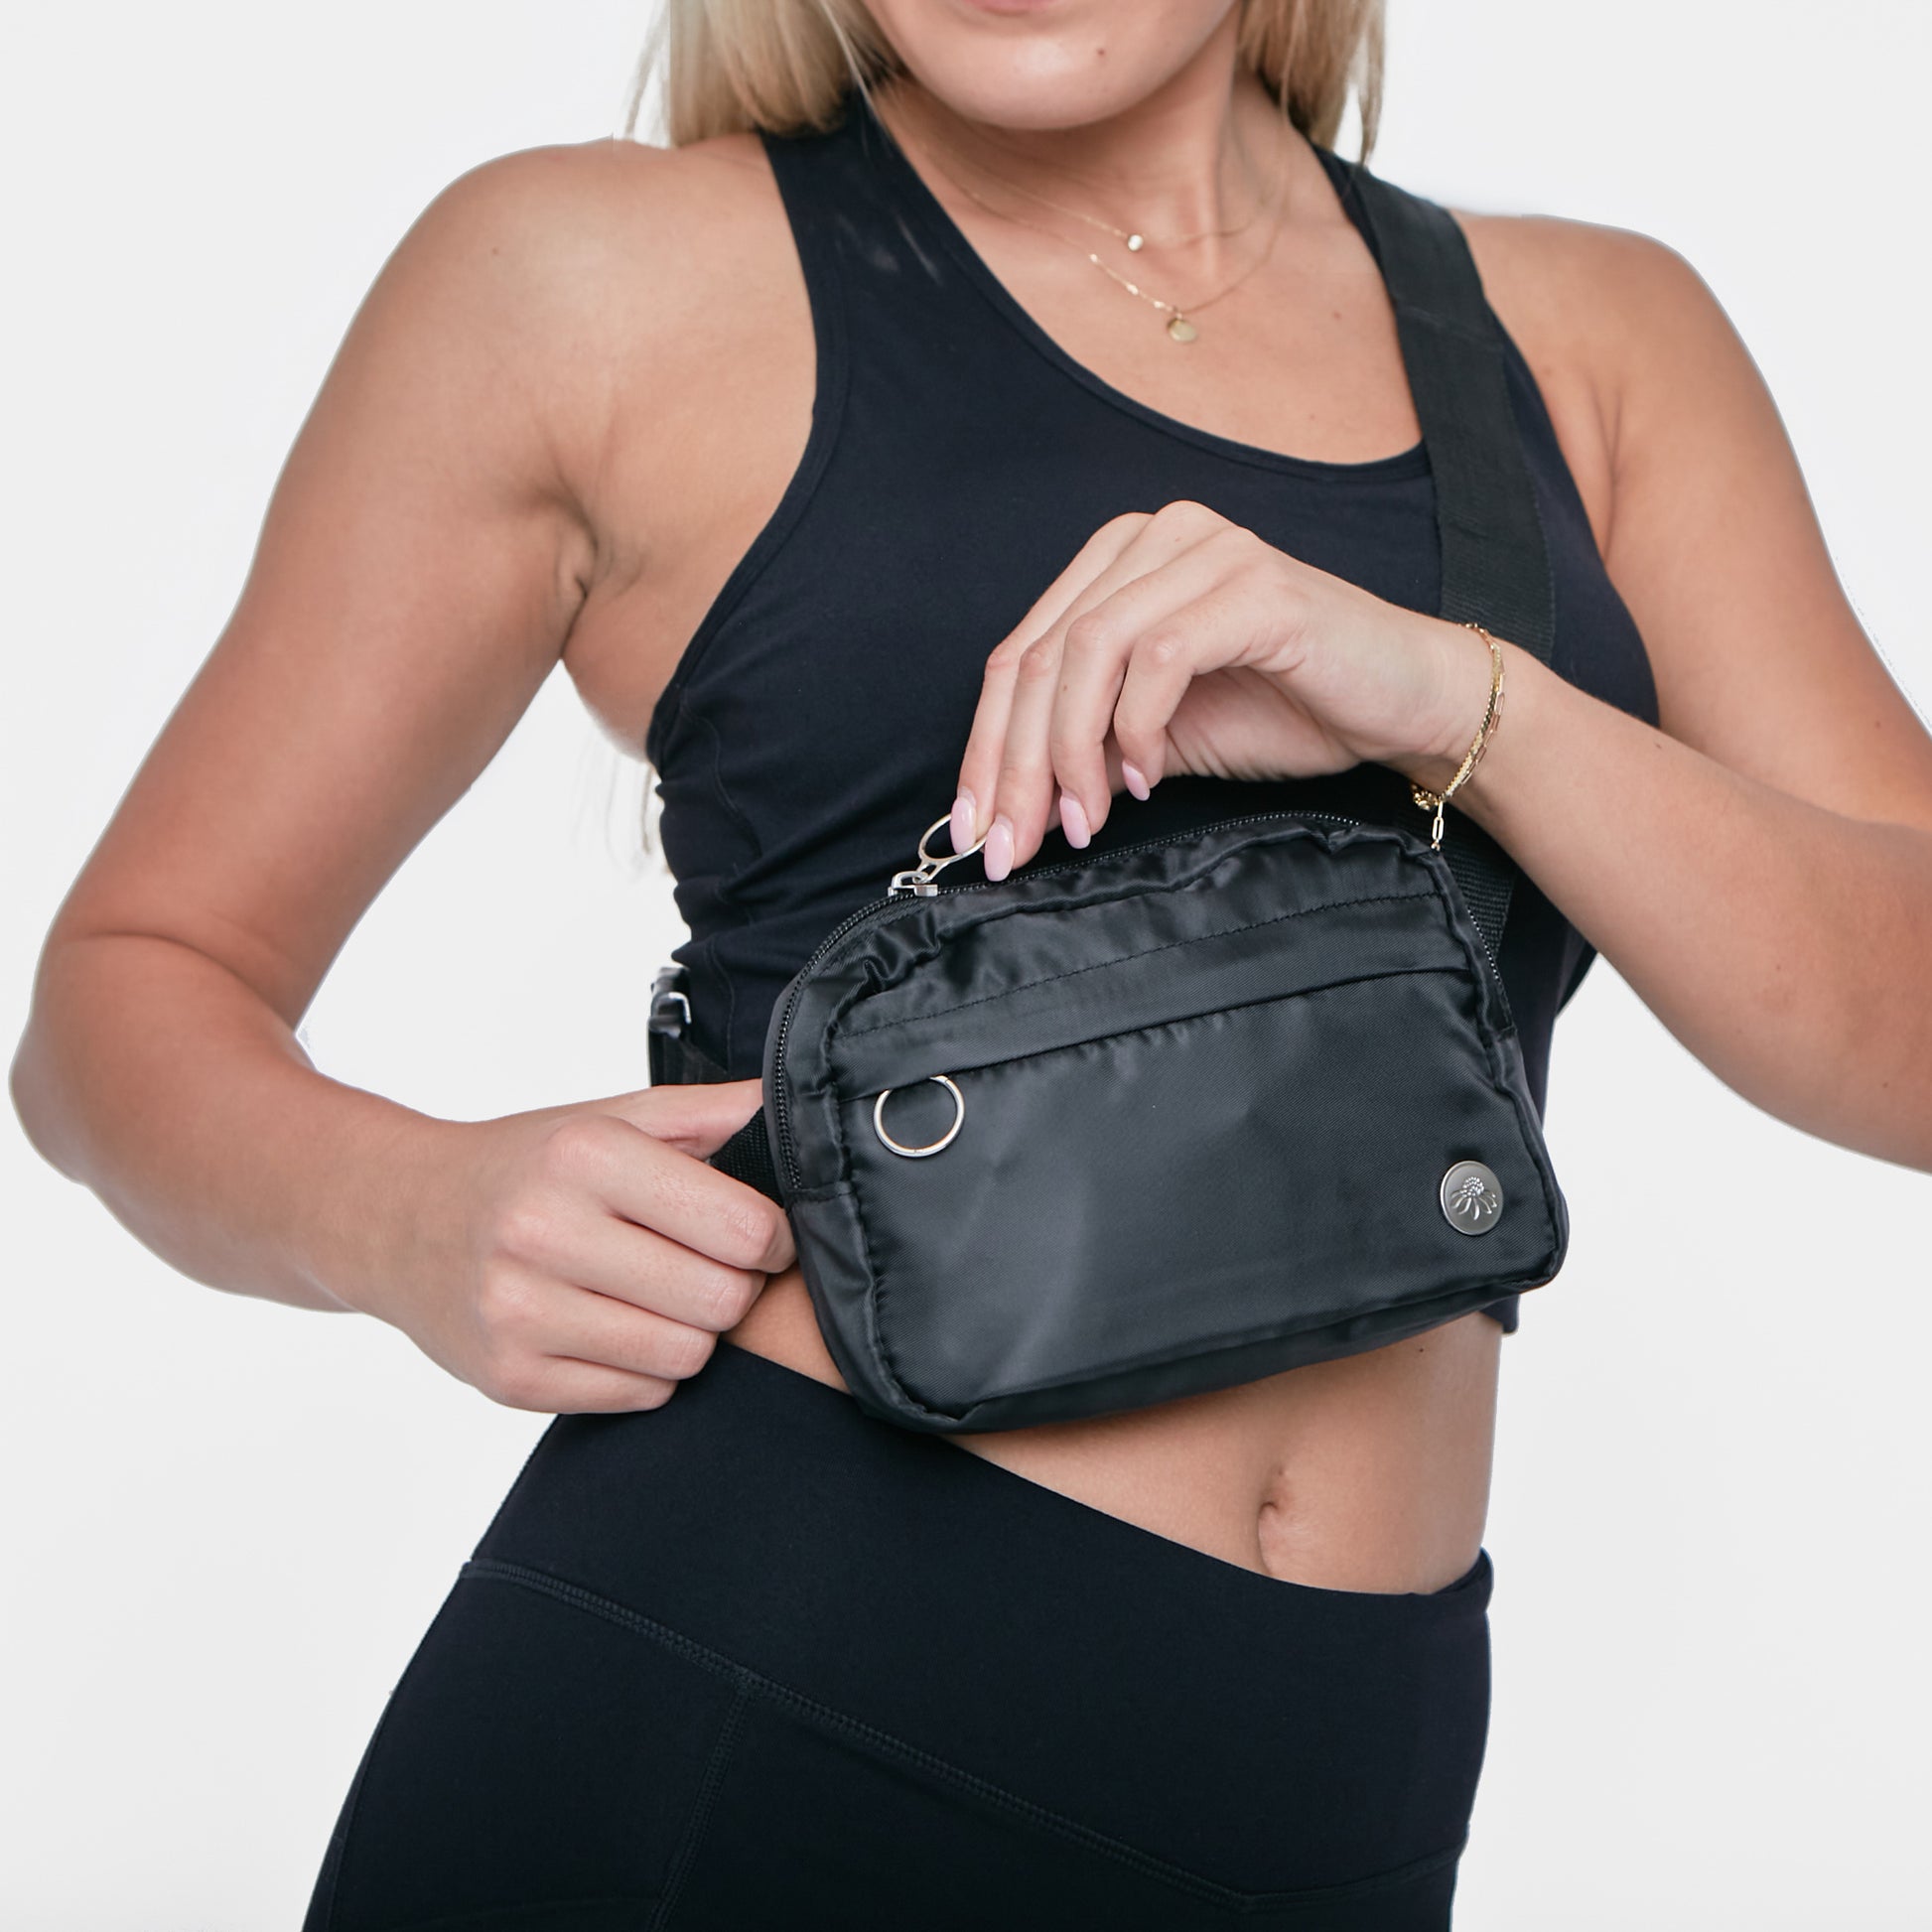 Lululemon Everywhere Belt Bag Large 2L - Black/Neutral